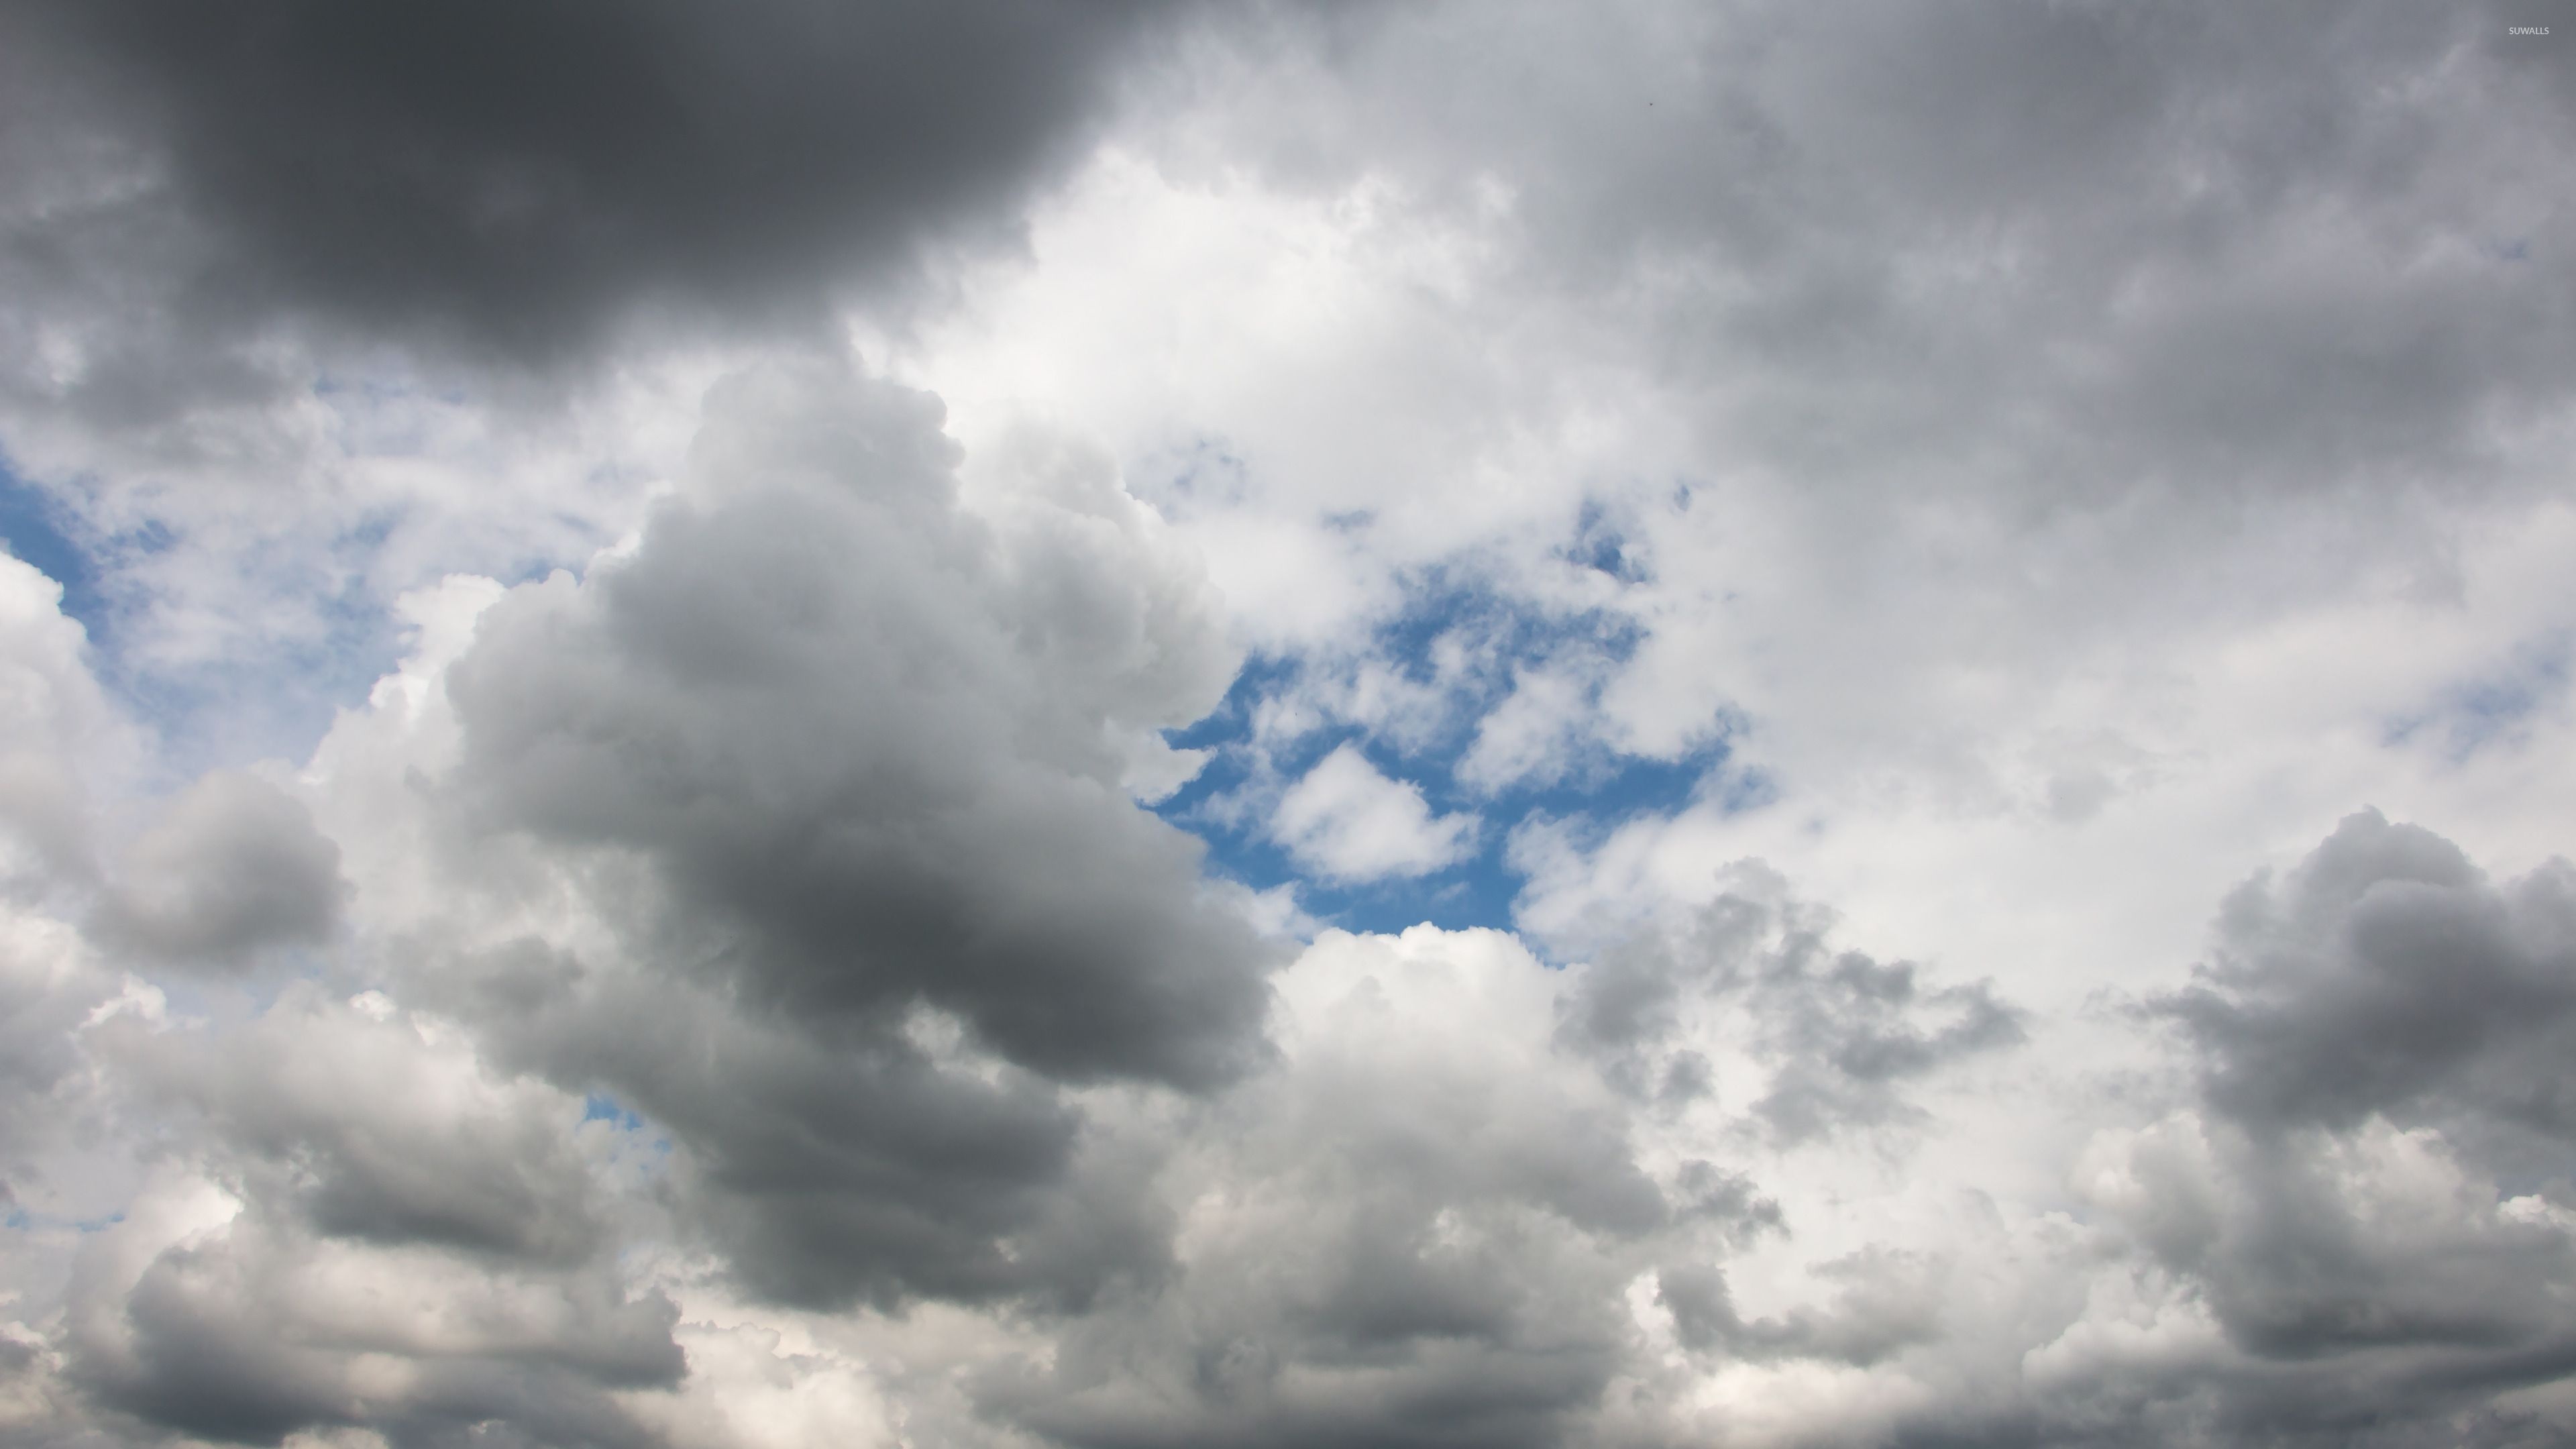 Gray Cloudy Sky: Overcast skies, Gloomy weather, Impending rain. 3840x2160 4K Wallpaper.